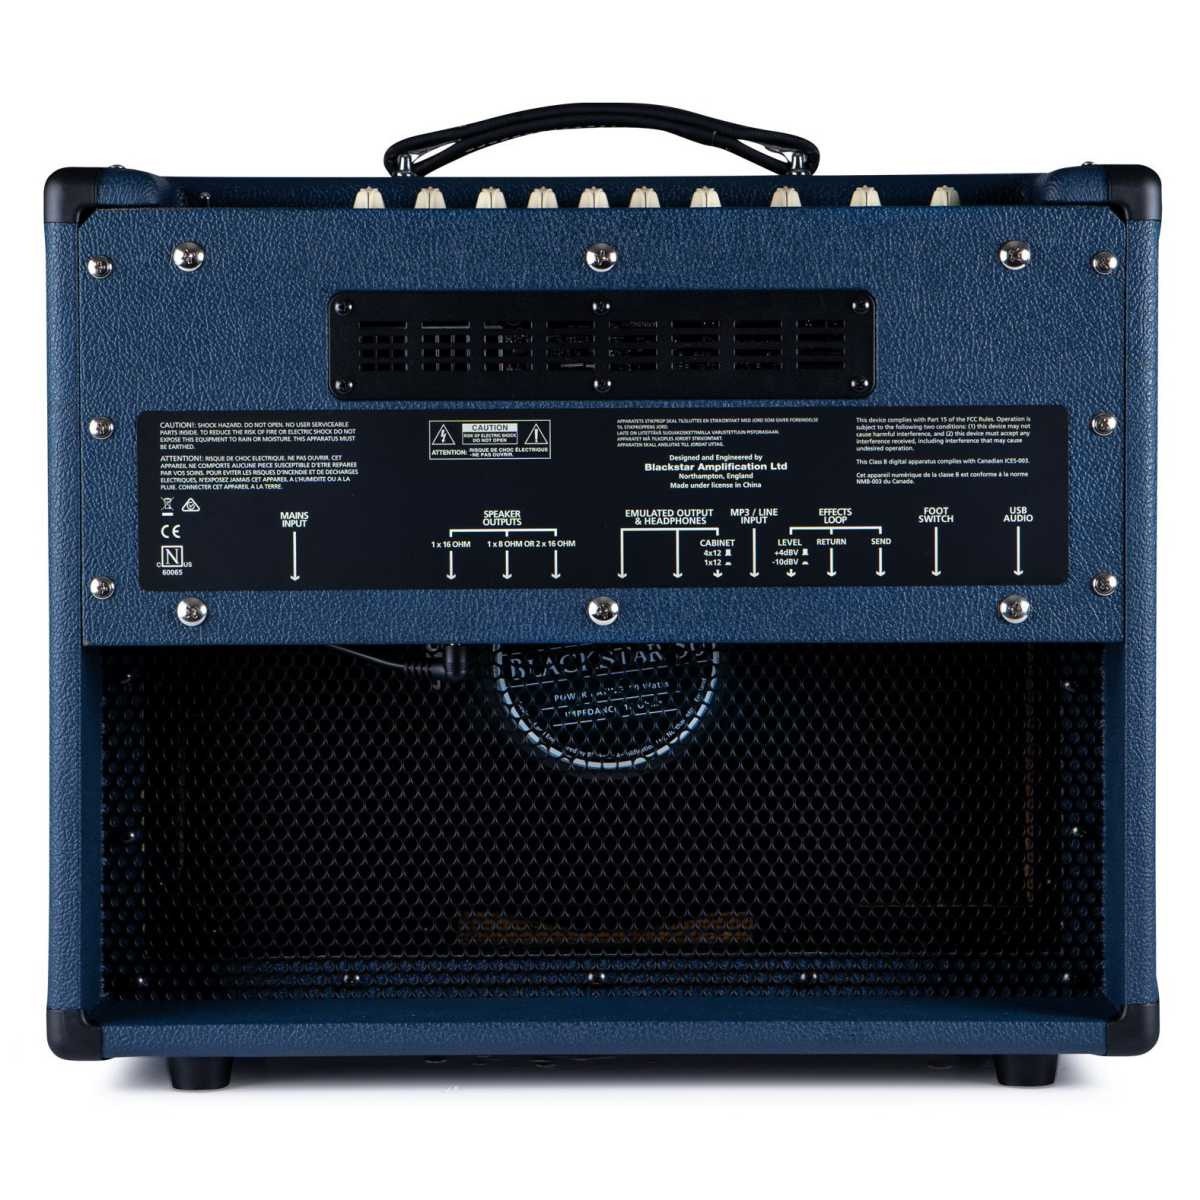 Blackstar Ht20r Mk2 20w 1x12 Trafalgar Blue - Electric guitar combo amp - Variation 1